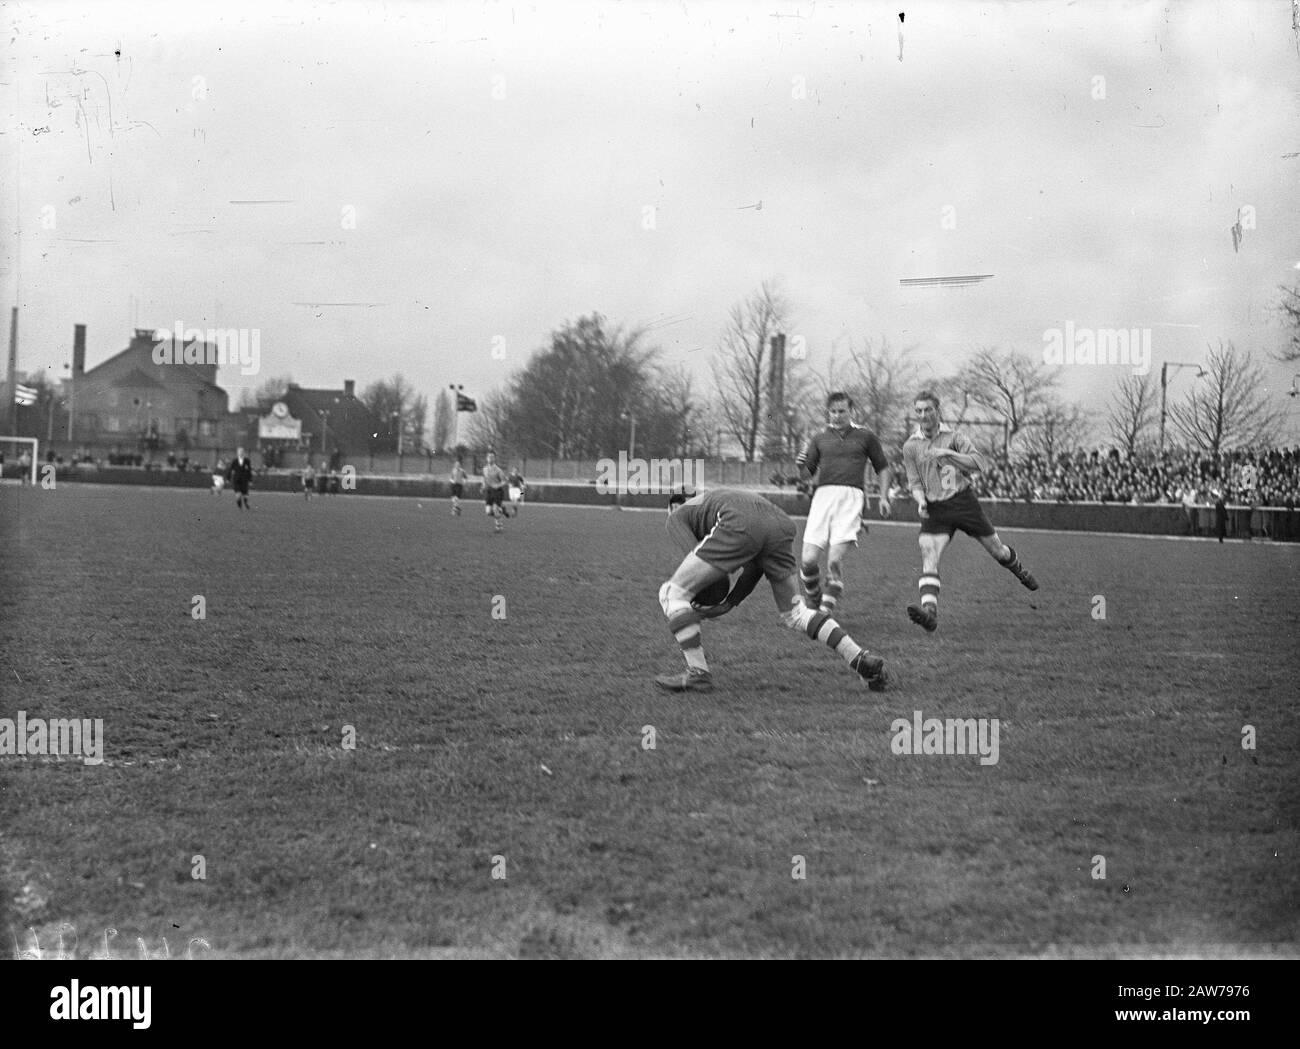 PSV against Emmen 1-1. Schotanus anticipation grabs ball Date: November 28, 1947 Location: Emmen Keywords: sport, football Institution Name: PSV Stock Photo